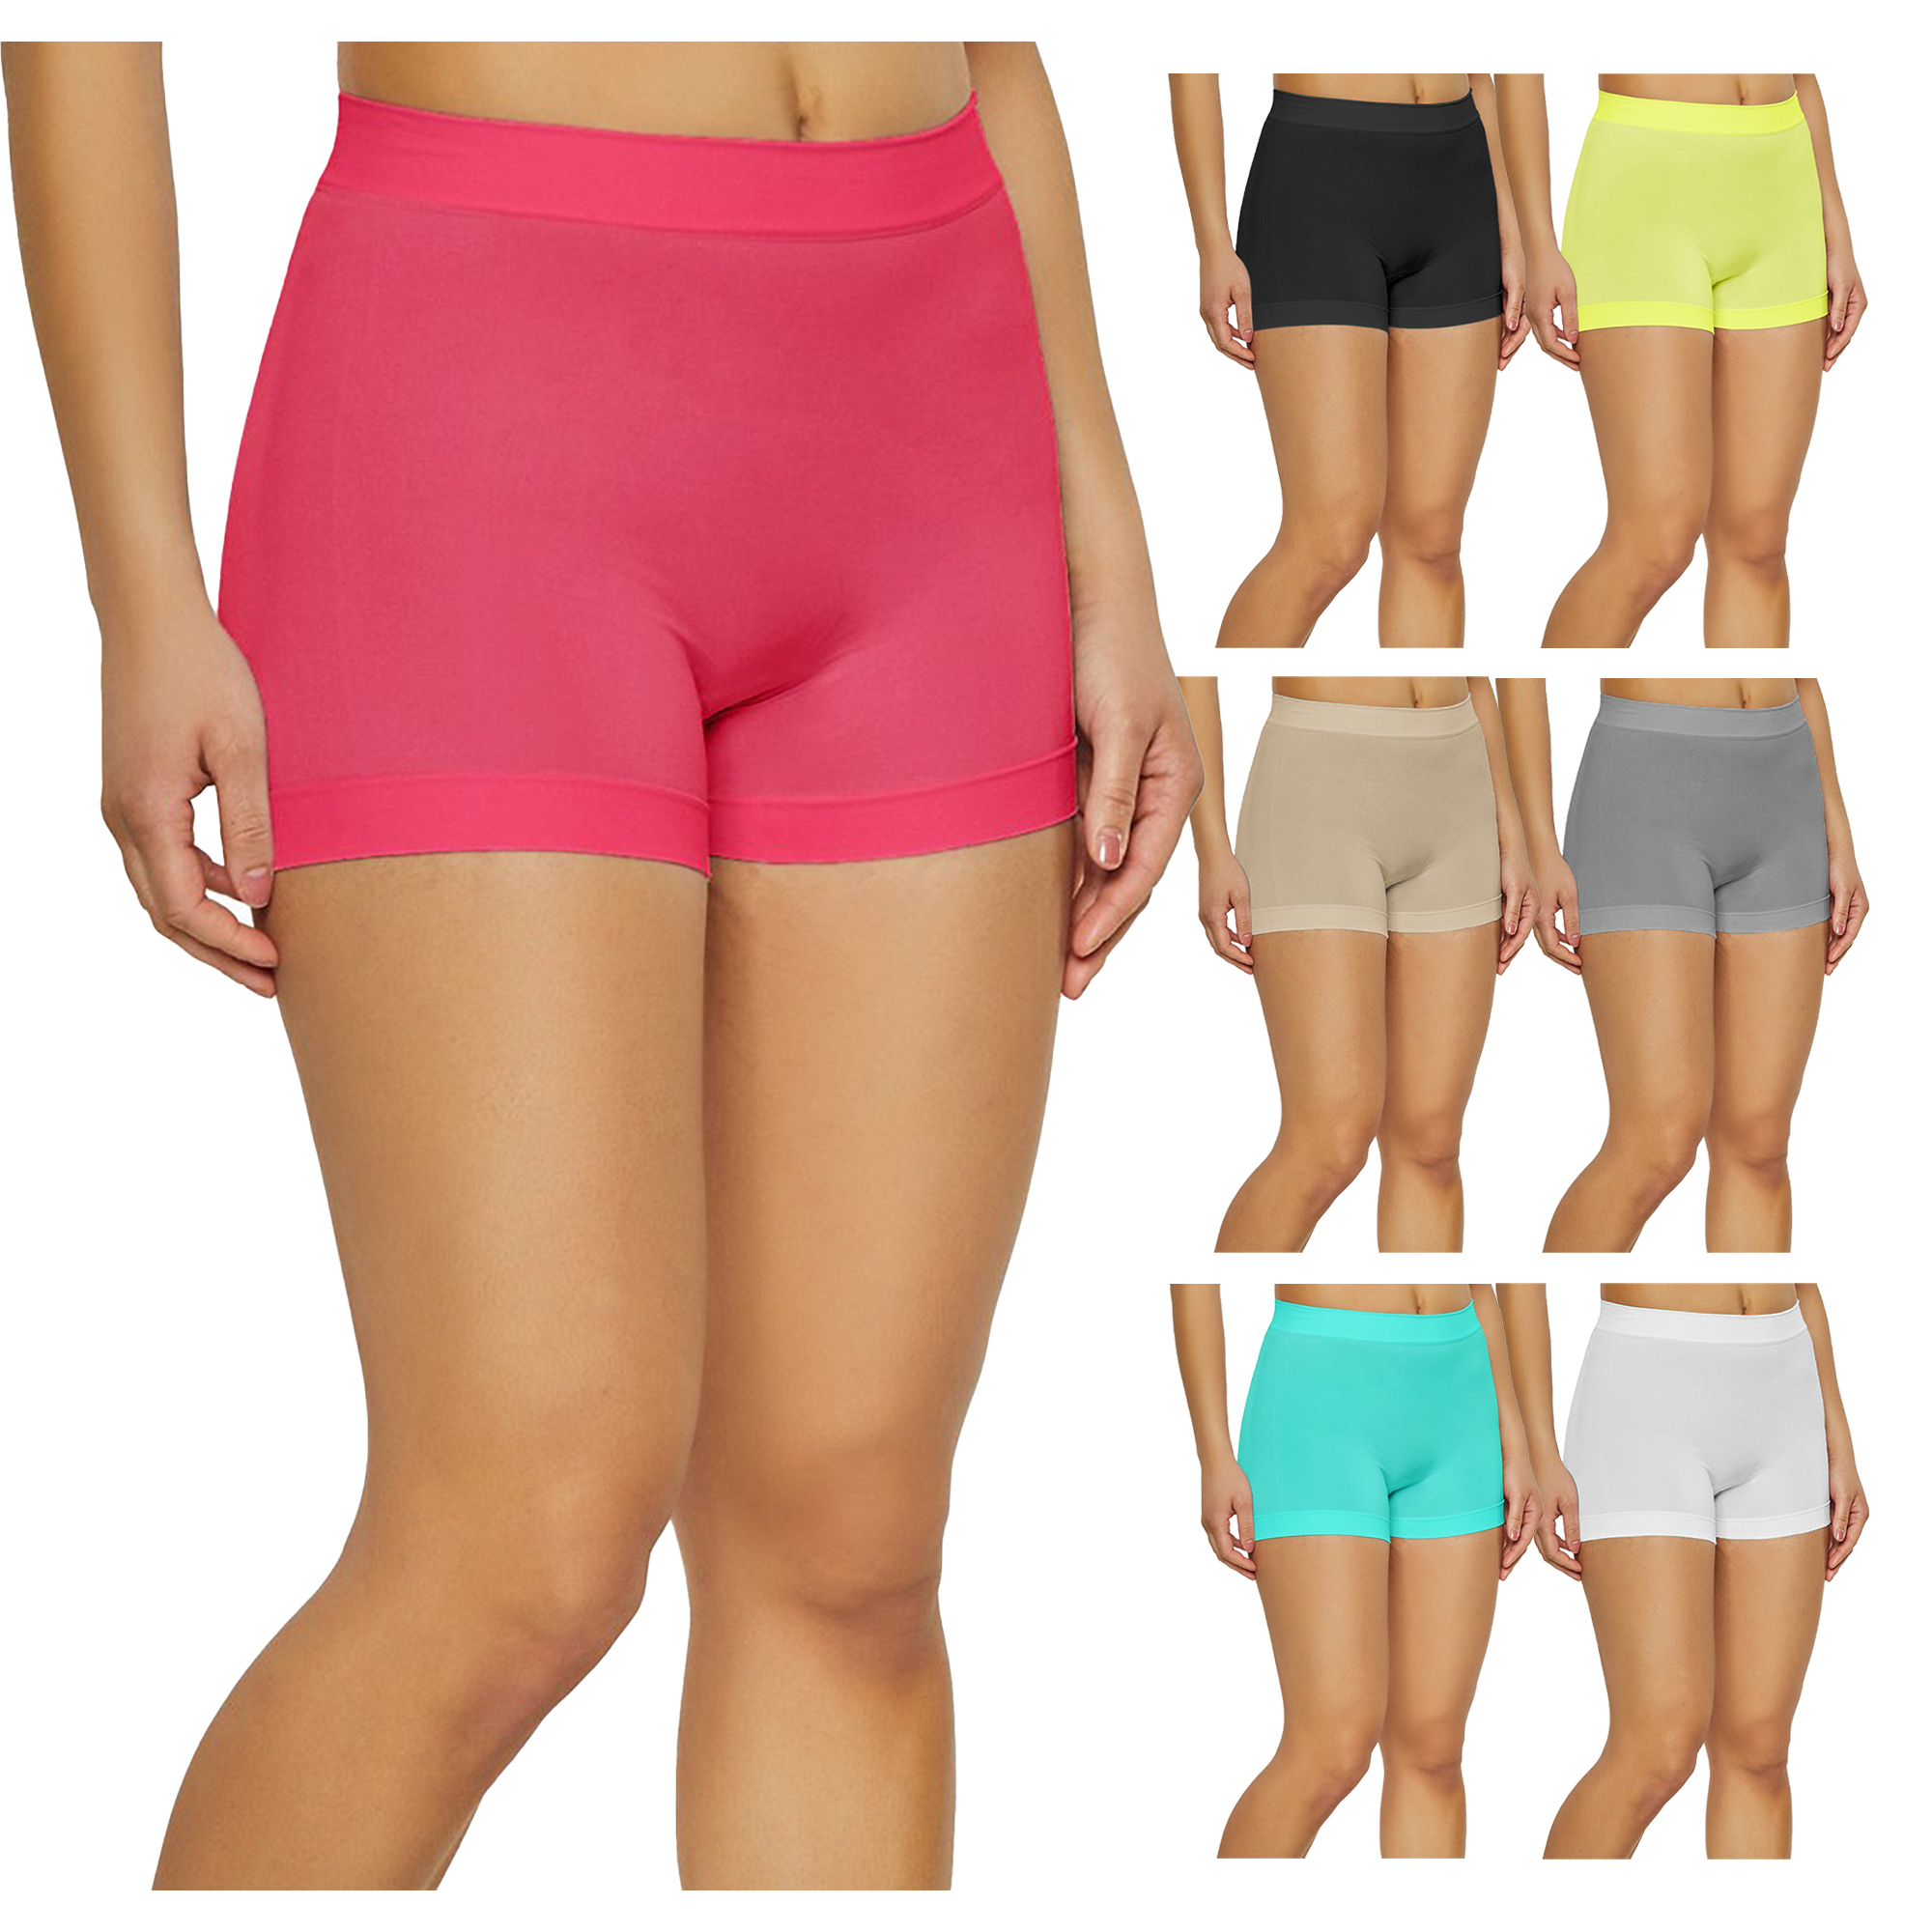 12-Pack Women's High Waisted Biker Bottom Shorts For Yoga Gym Running Ladies Pants - BLACK, XXL